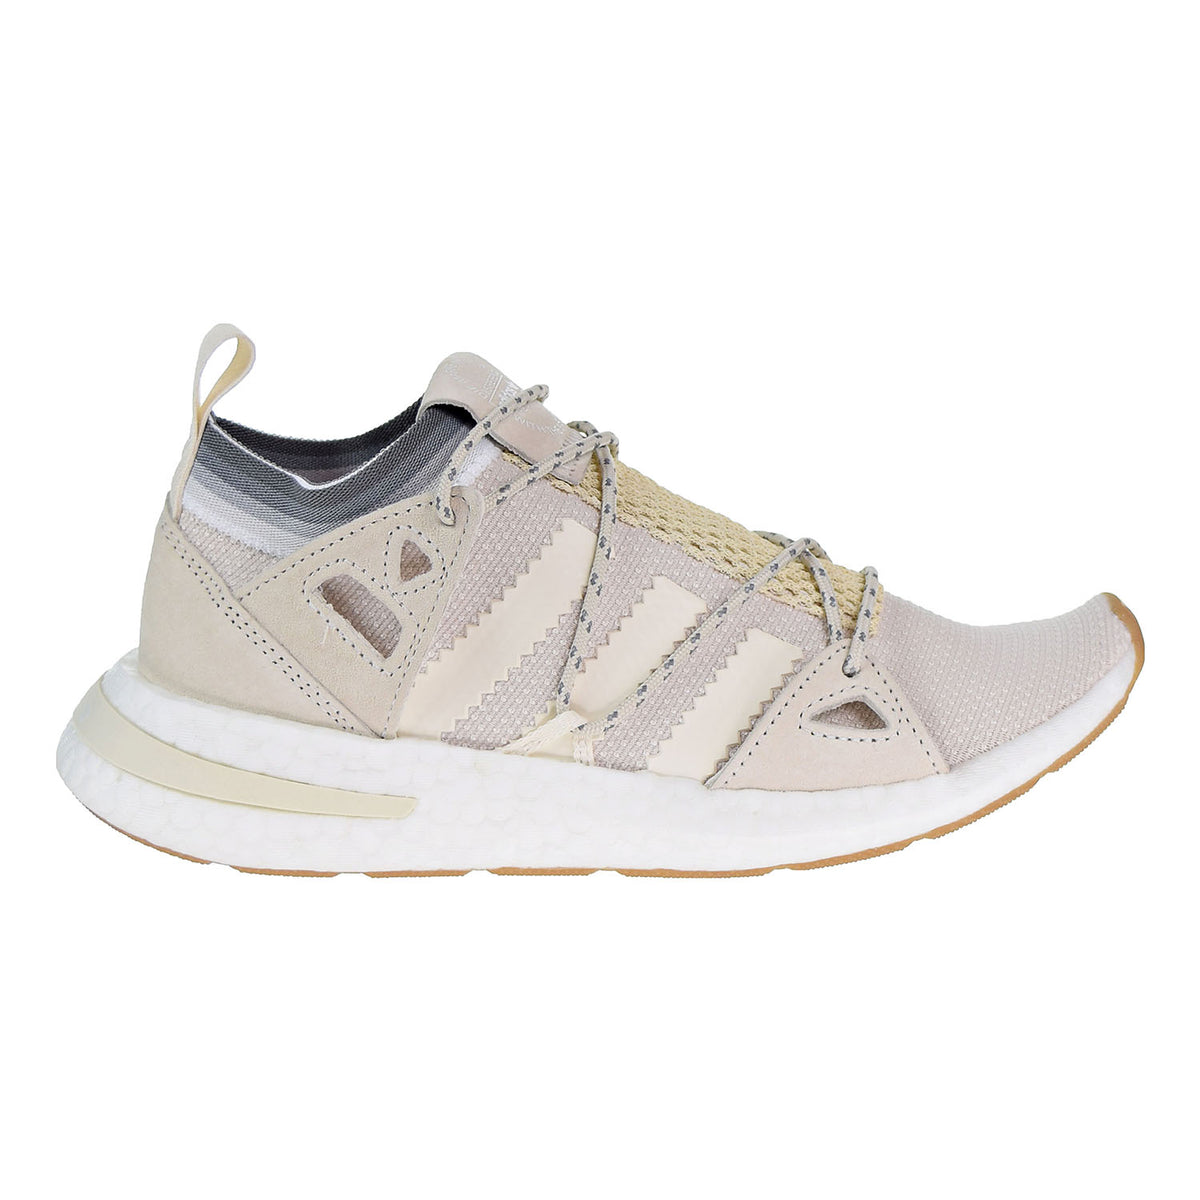 Adidas Arkyn Running Shoes Chalk White/Footwear White/Gum